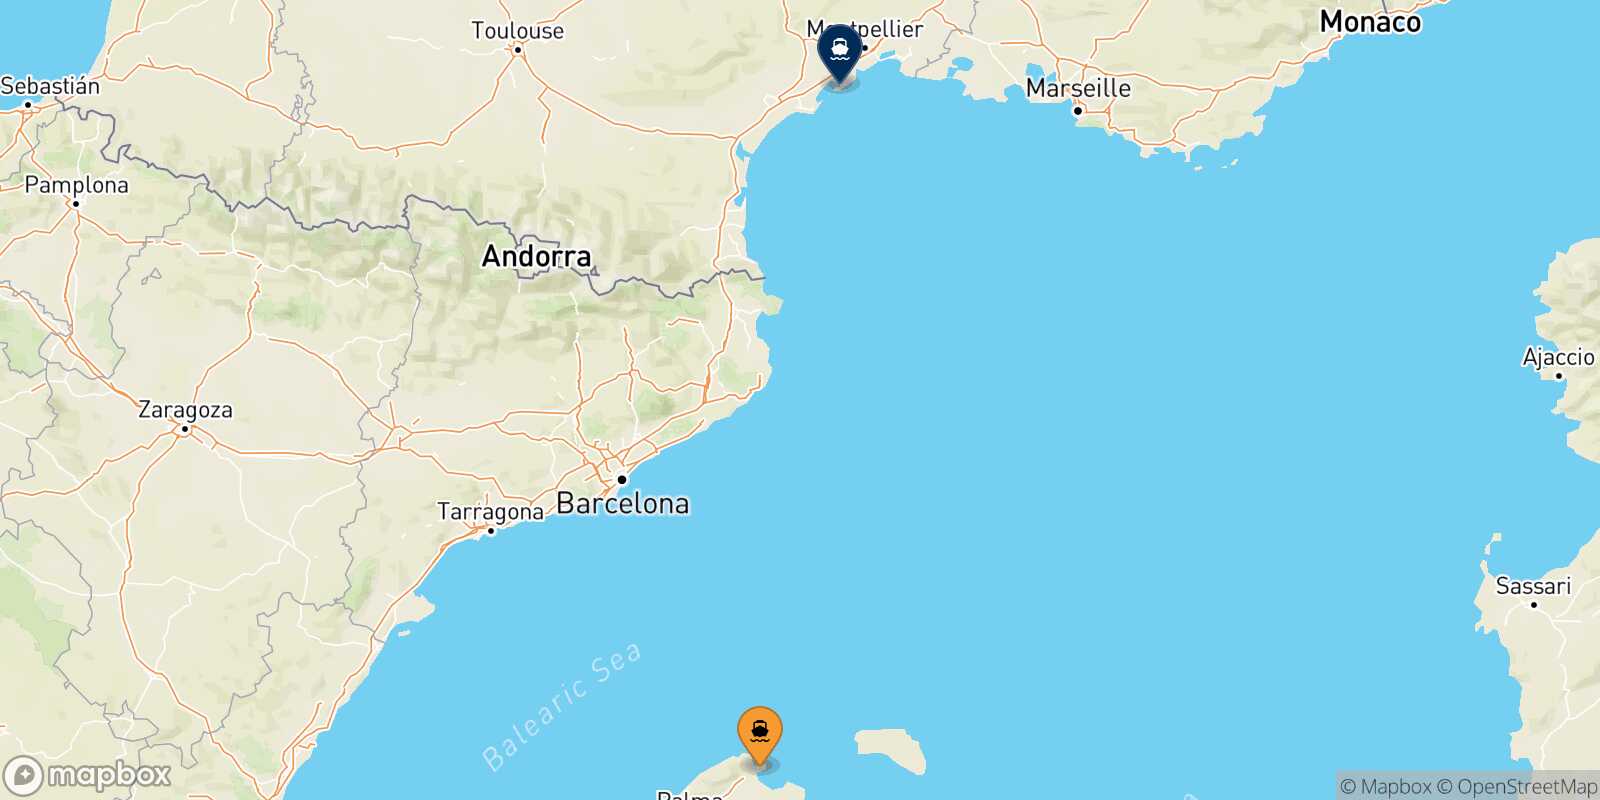 Carte des traverséesAlcudia (Majorque) Sète